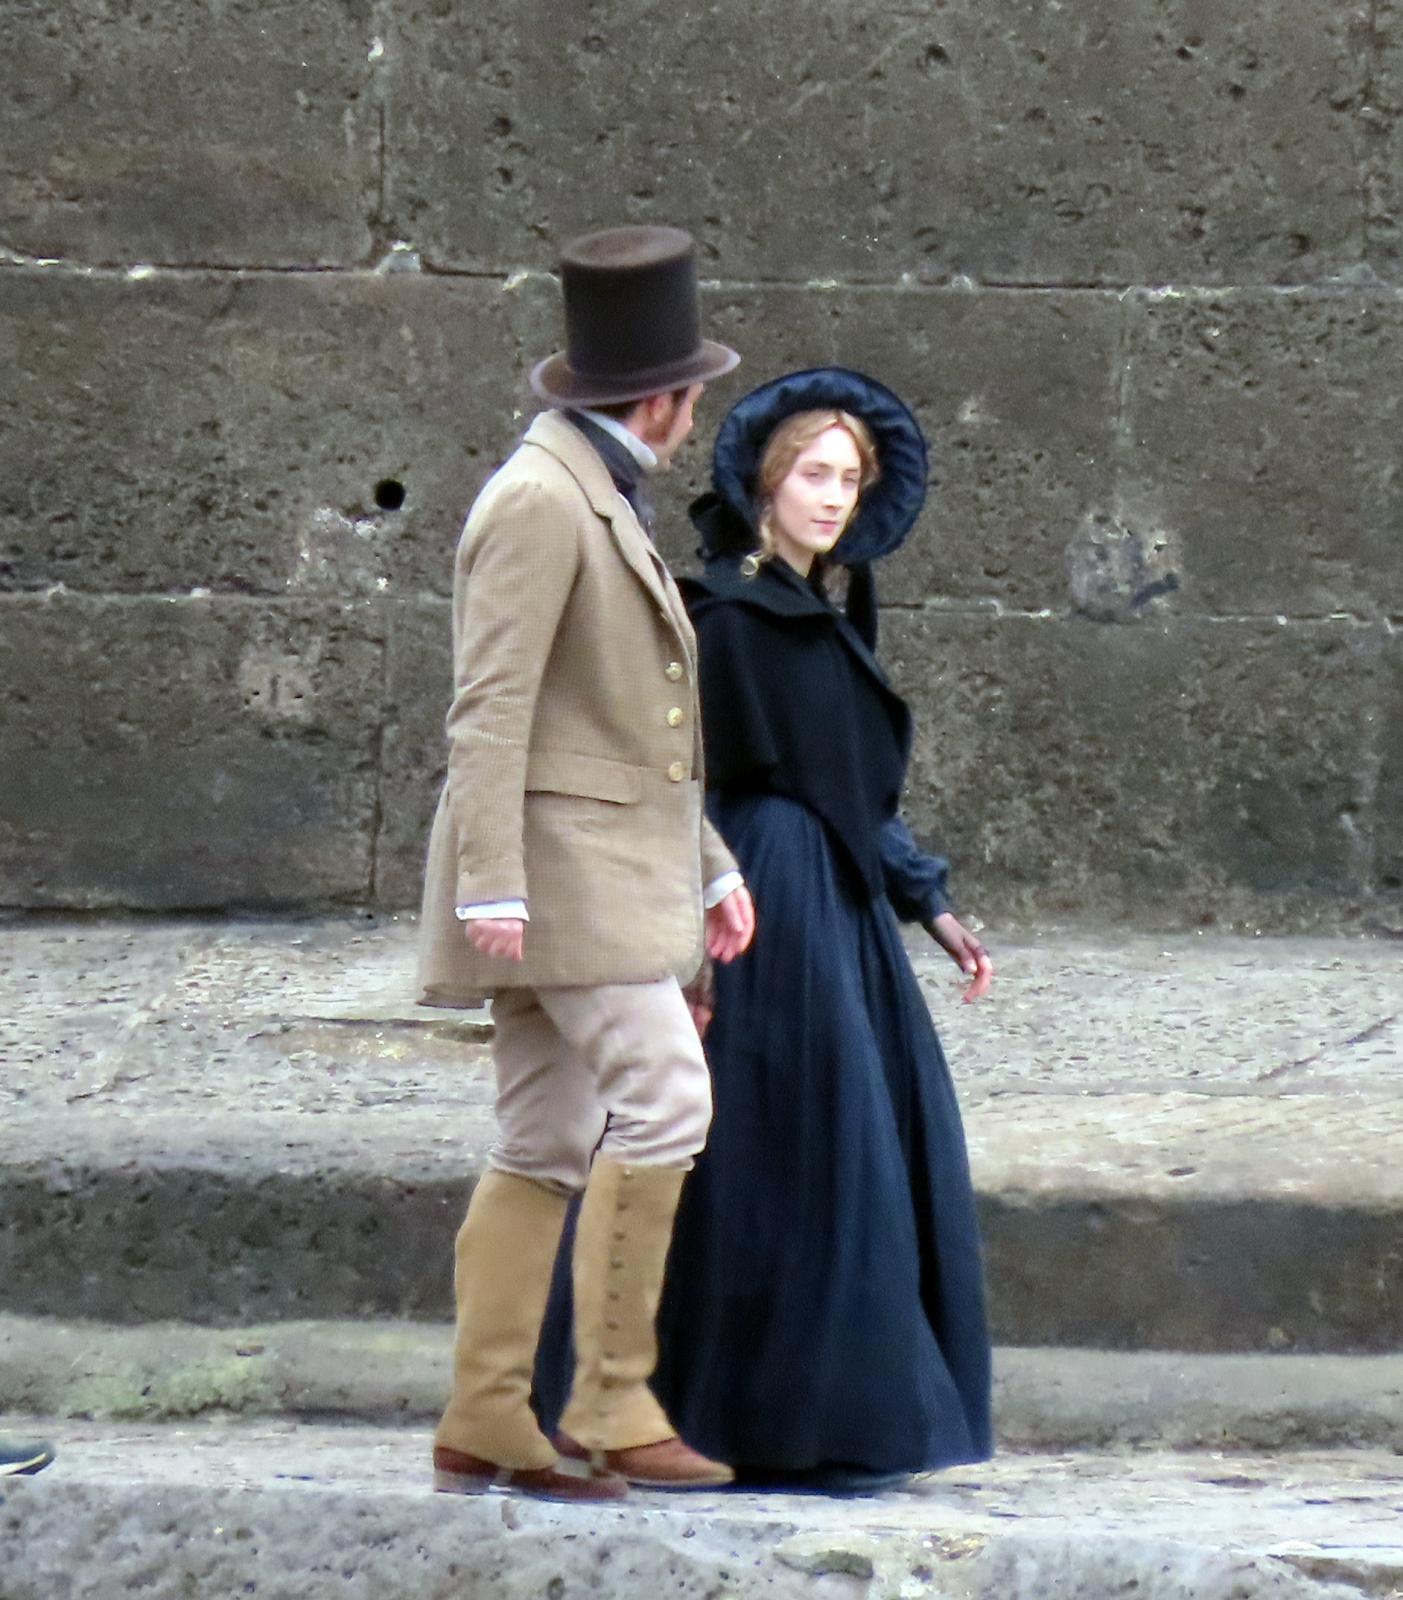 Saoirse Ronan during the filming of Ammonite in Lyme Regis